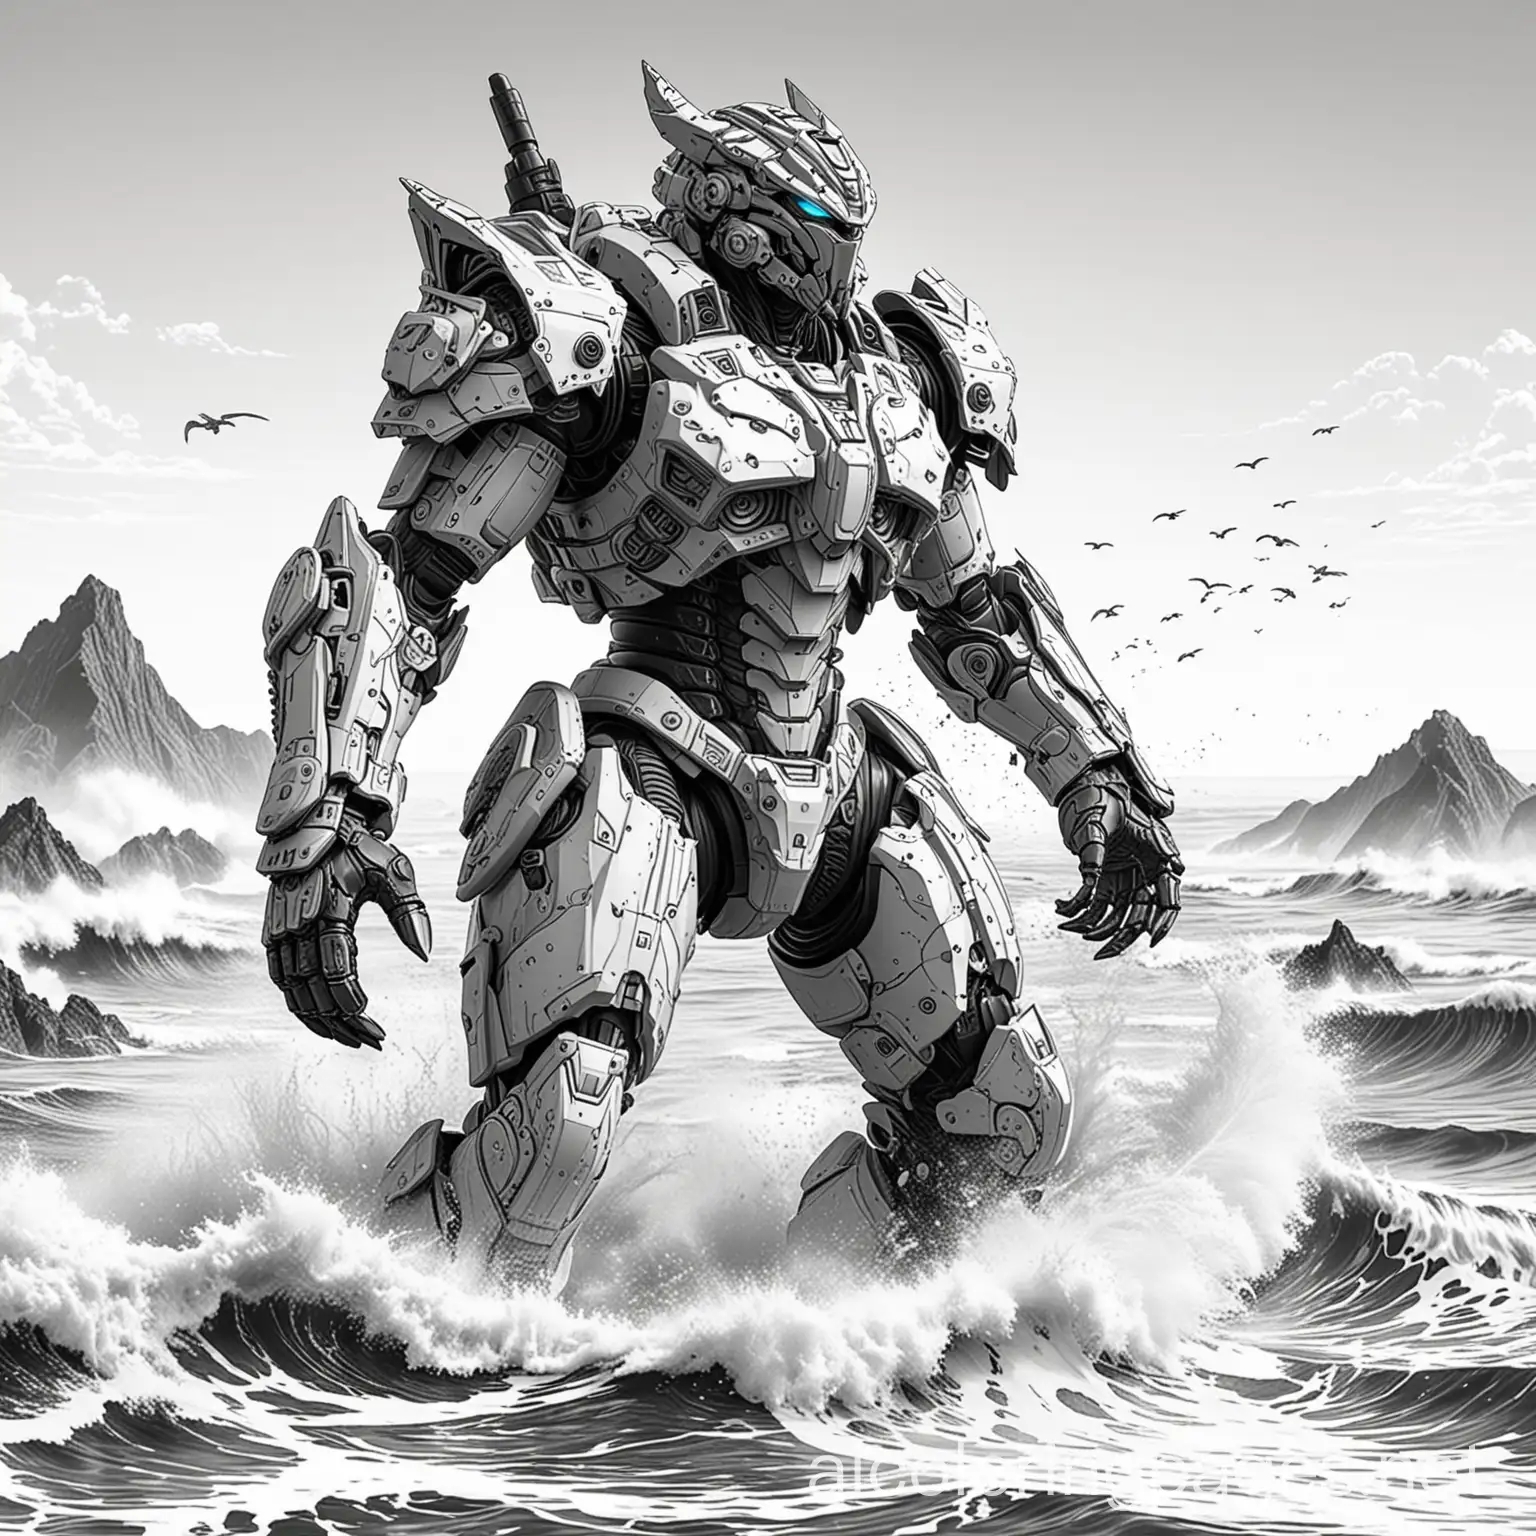 Mecha-Armor-Soldier-Battles-Kaiju-in-Ocean-Coloring-Page